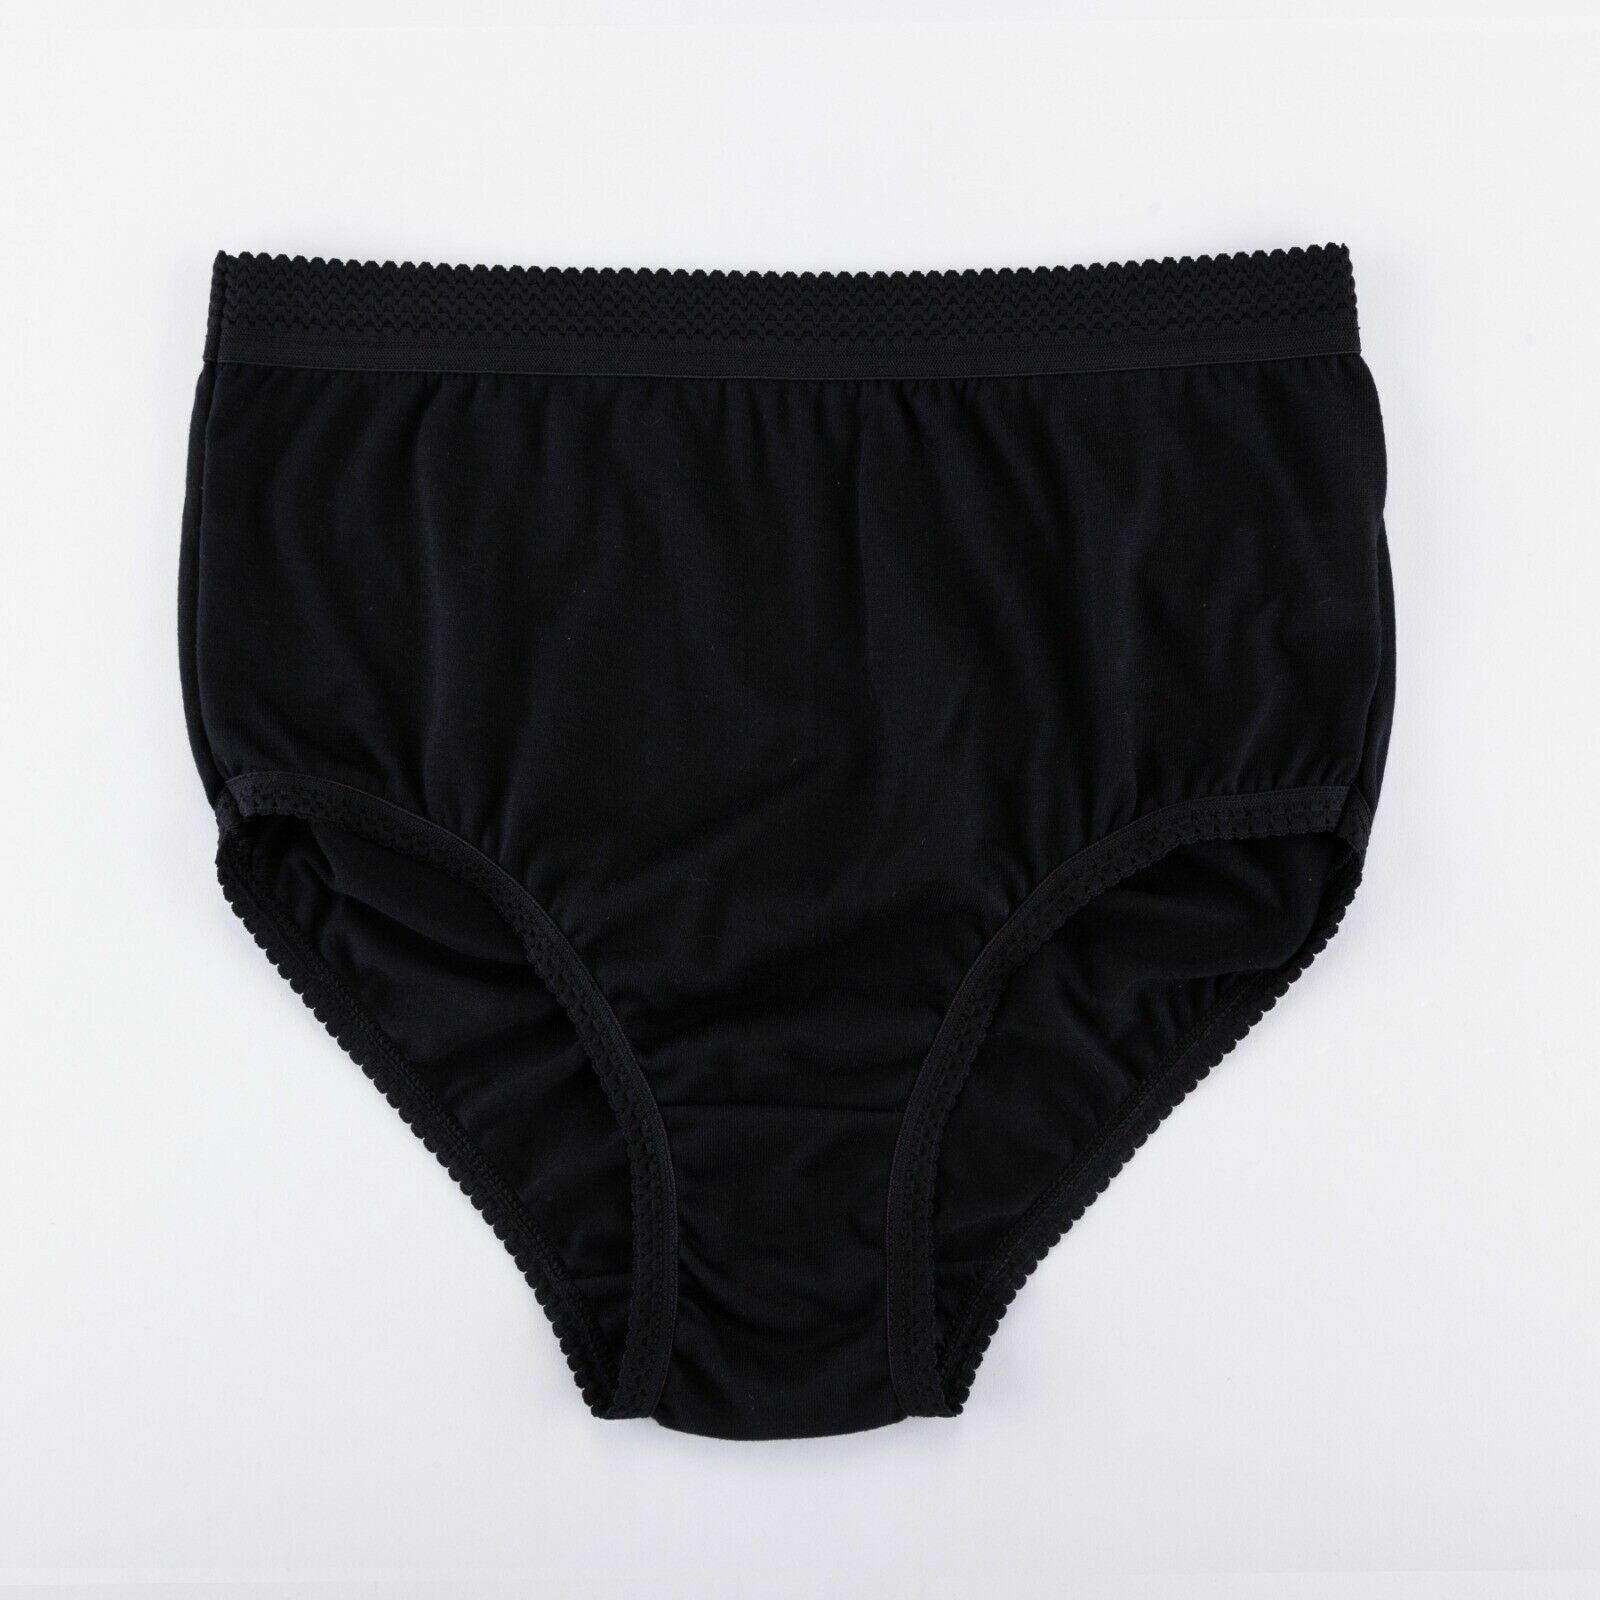 Underwear Ladies Briefs 100% Cotton Maxi Full Comfort Fit ,Size 10